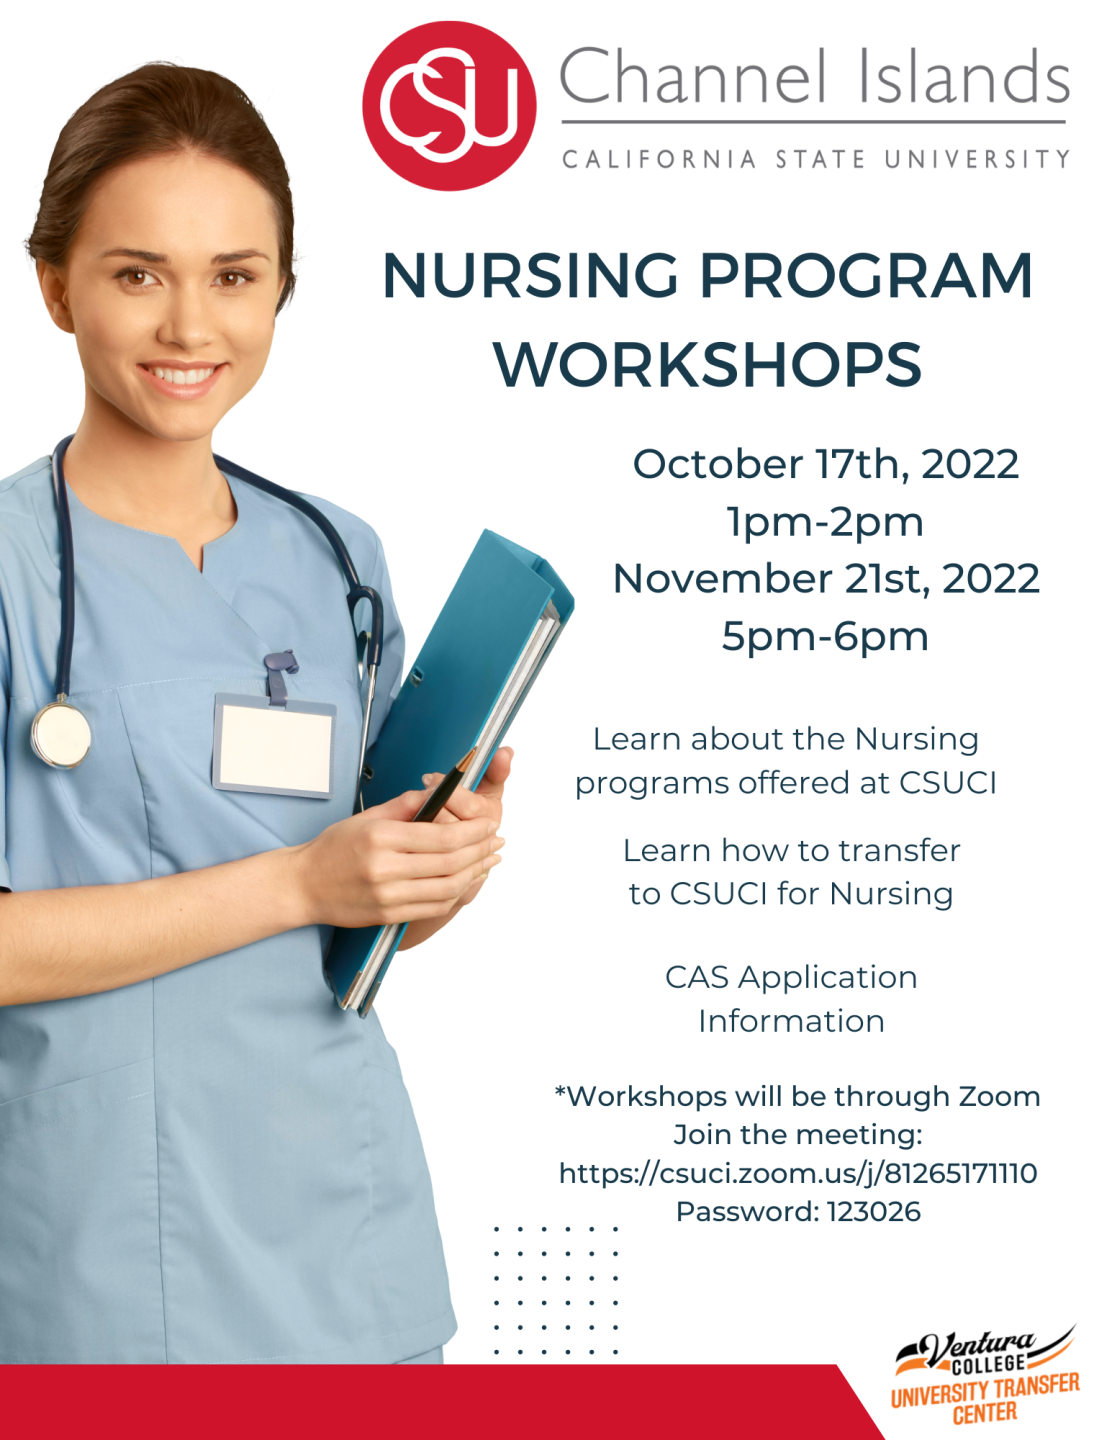 CSUCI nursing Program workshops